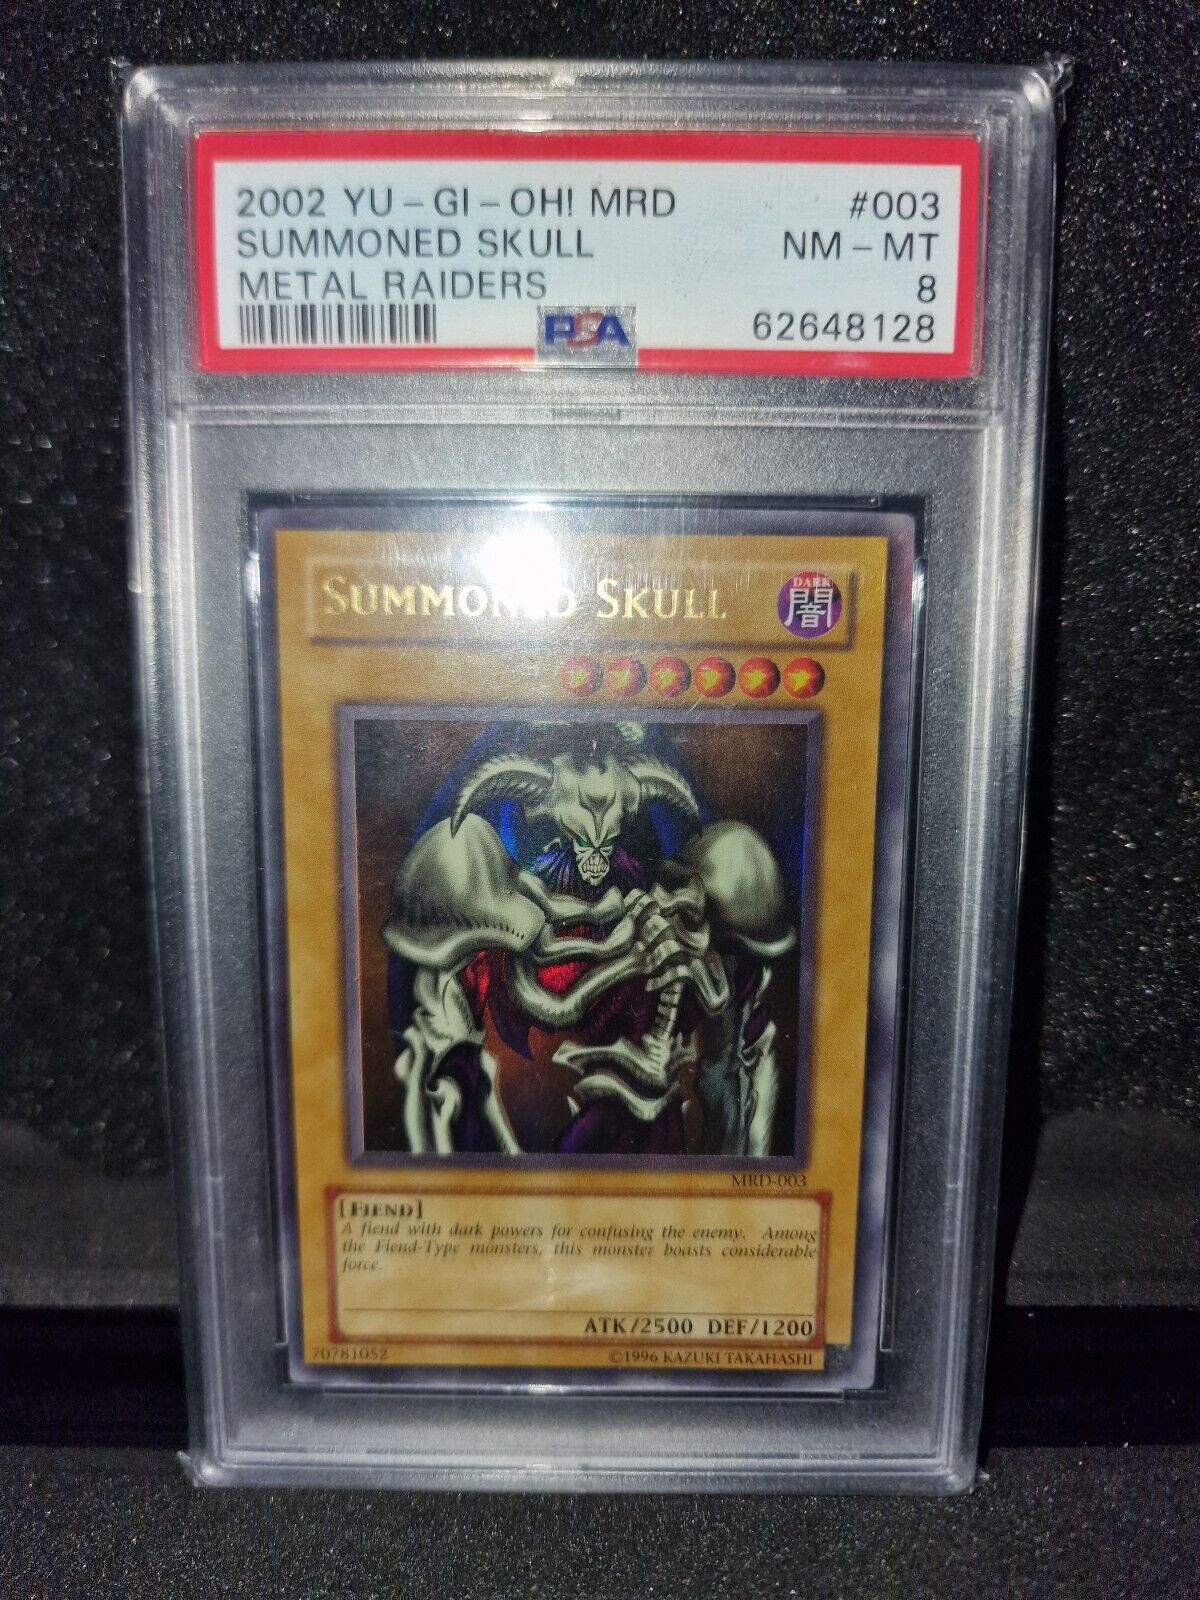 Summoned Skull 2002 Yu-Gi-Oh Metal Raiders Unlimited MRD-003 PSA 8